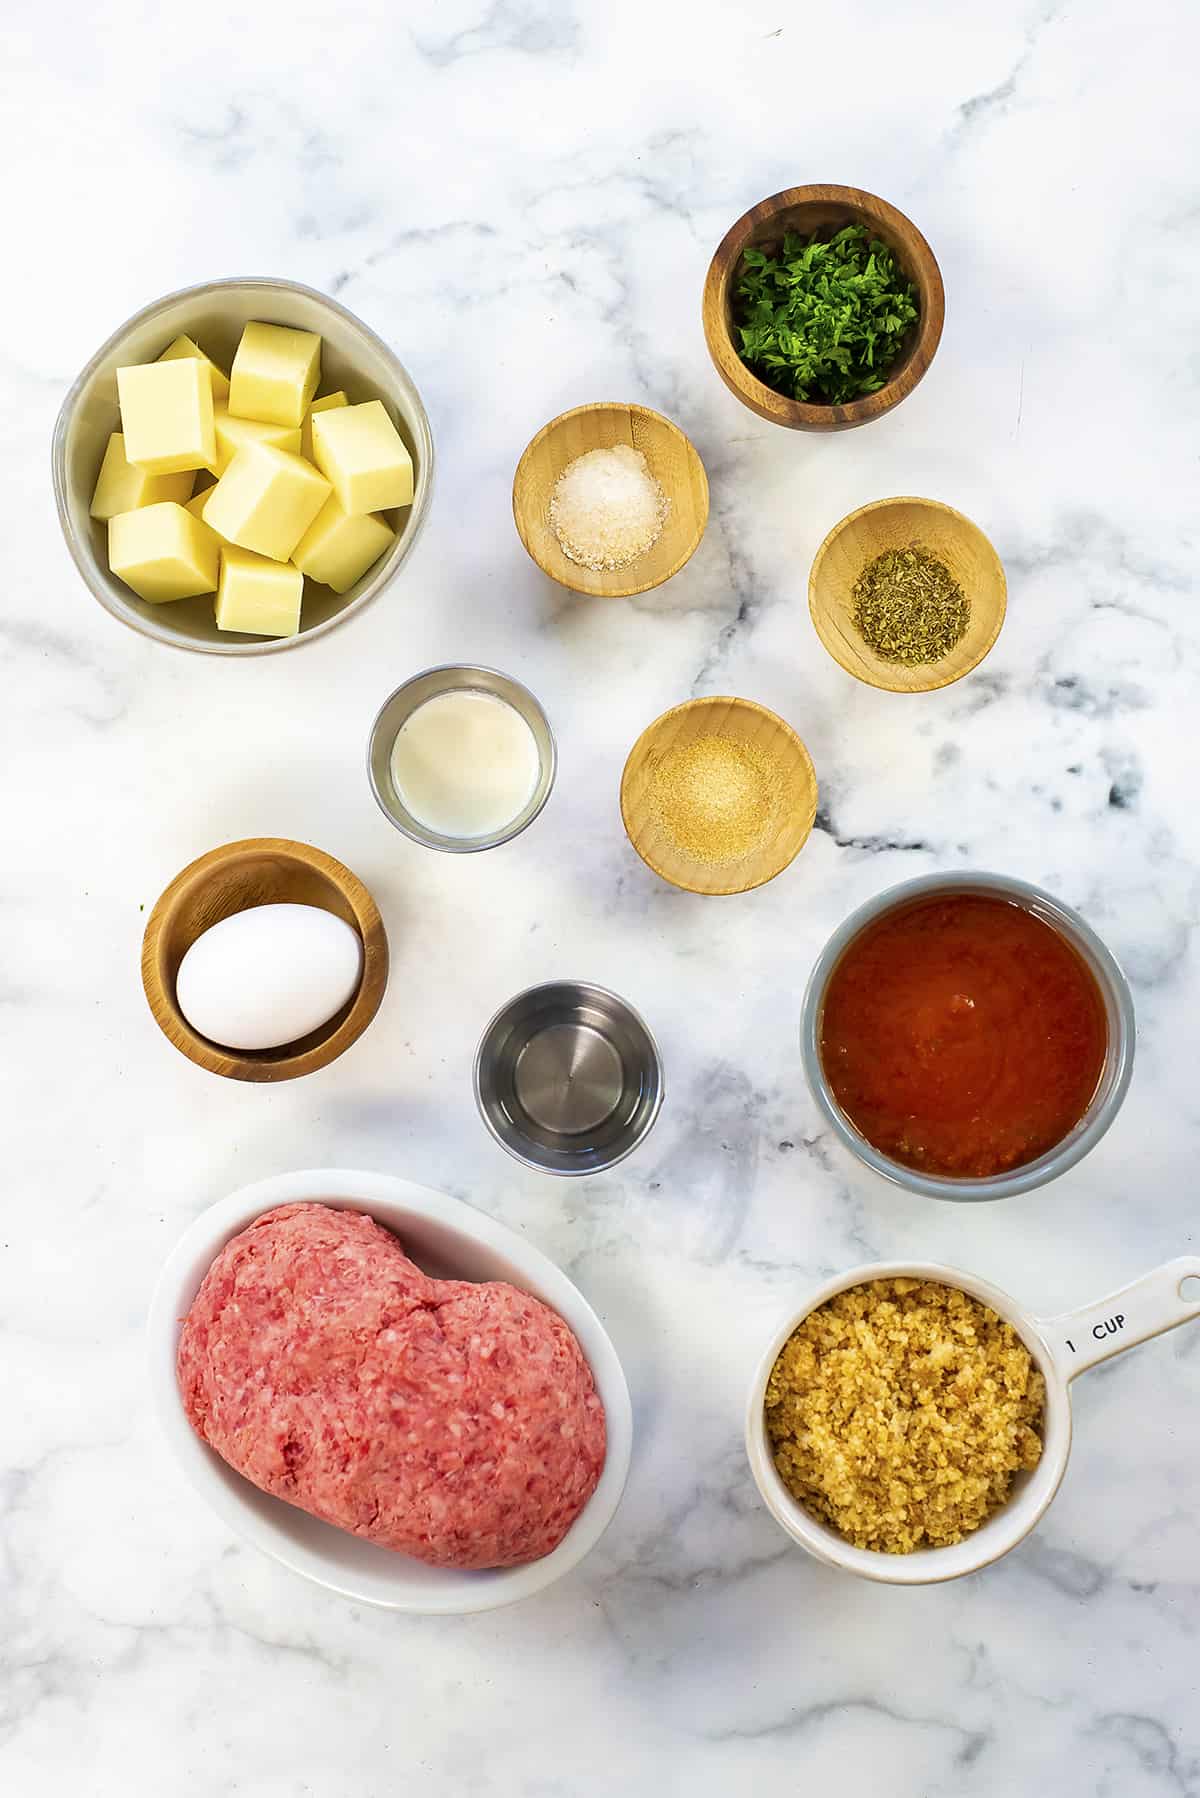 Ingredients for mozzarella stuffed meatballs.